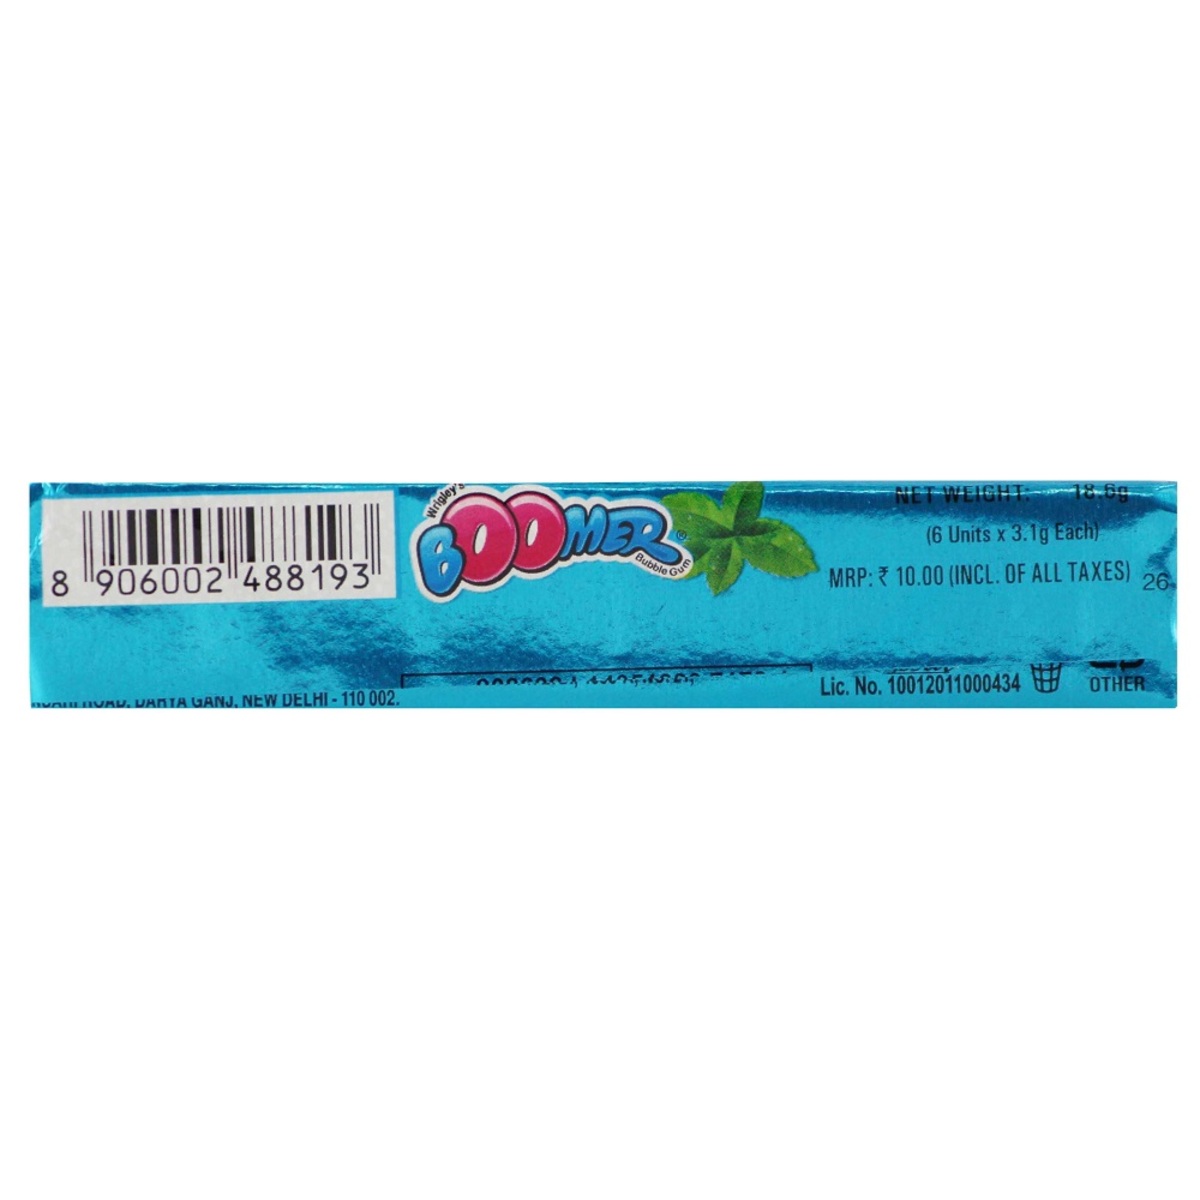 Wrigley's Chewing Gum Boomer Fresh Mint 18.5g